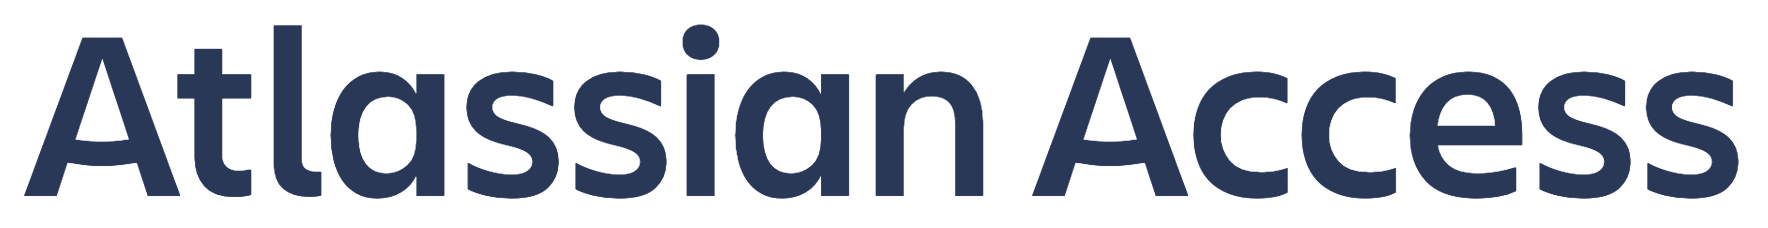 Atlassian Access Implementation